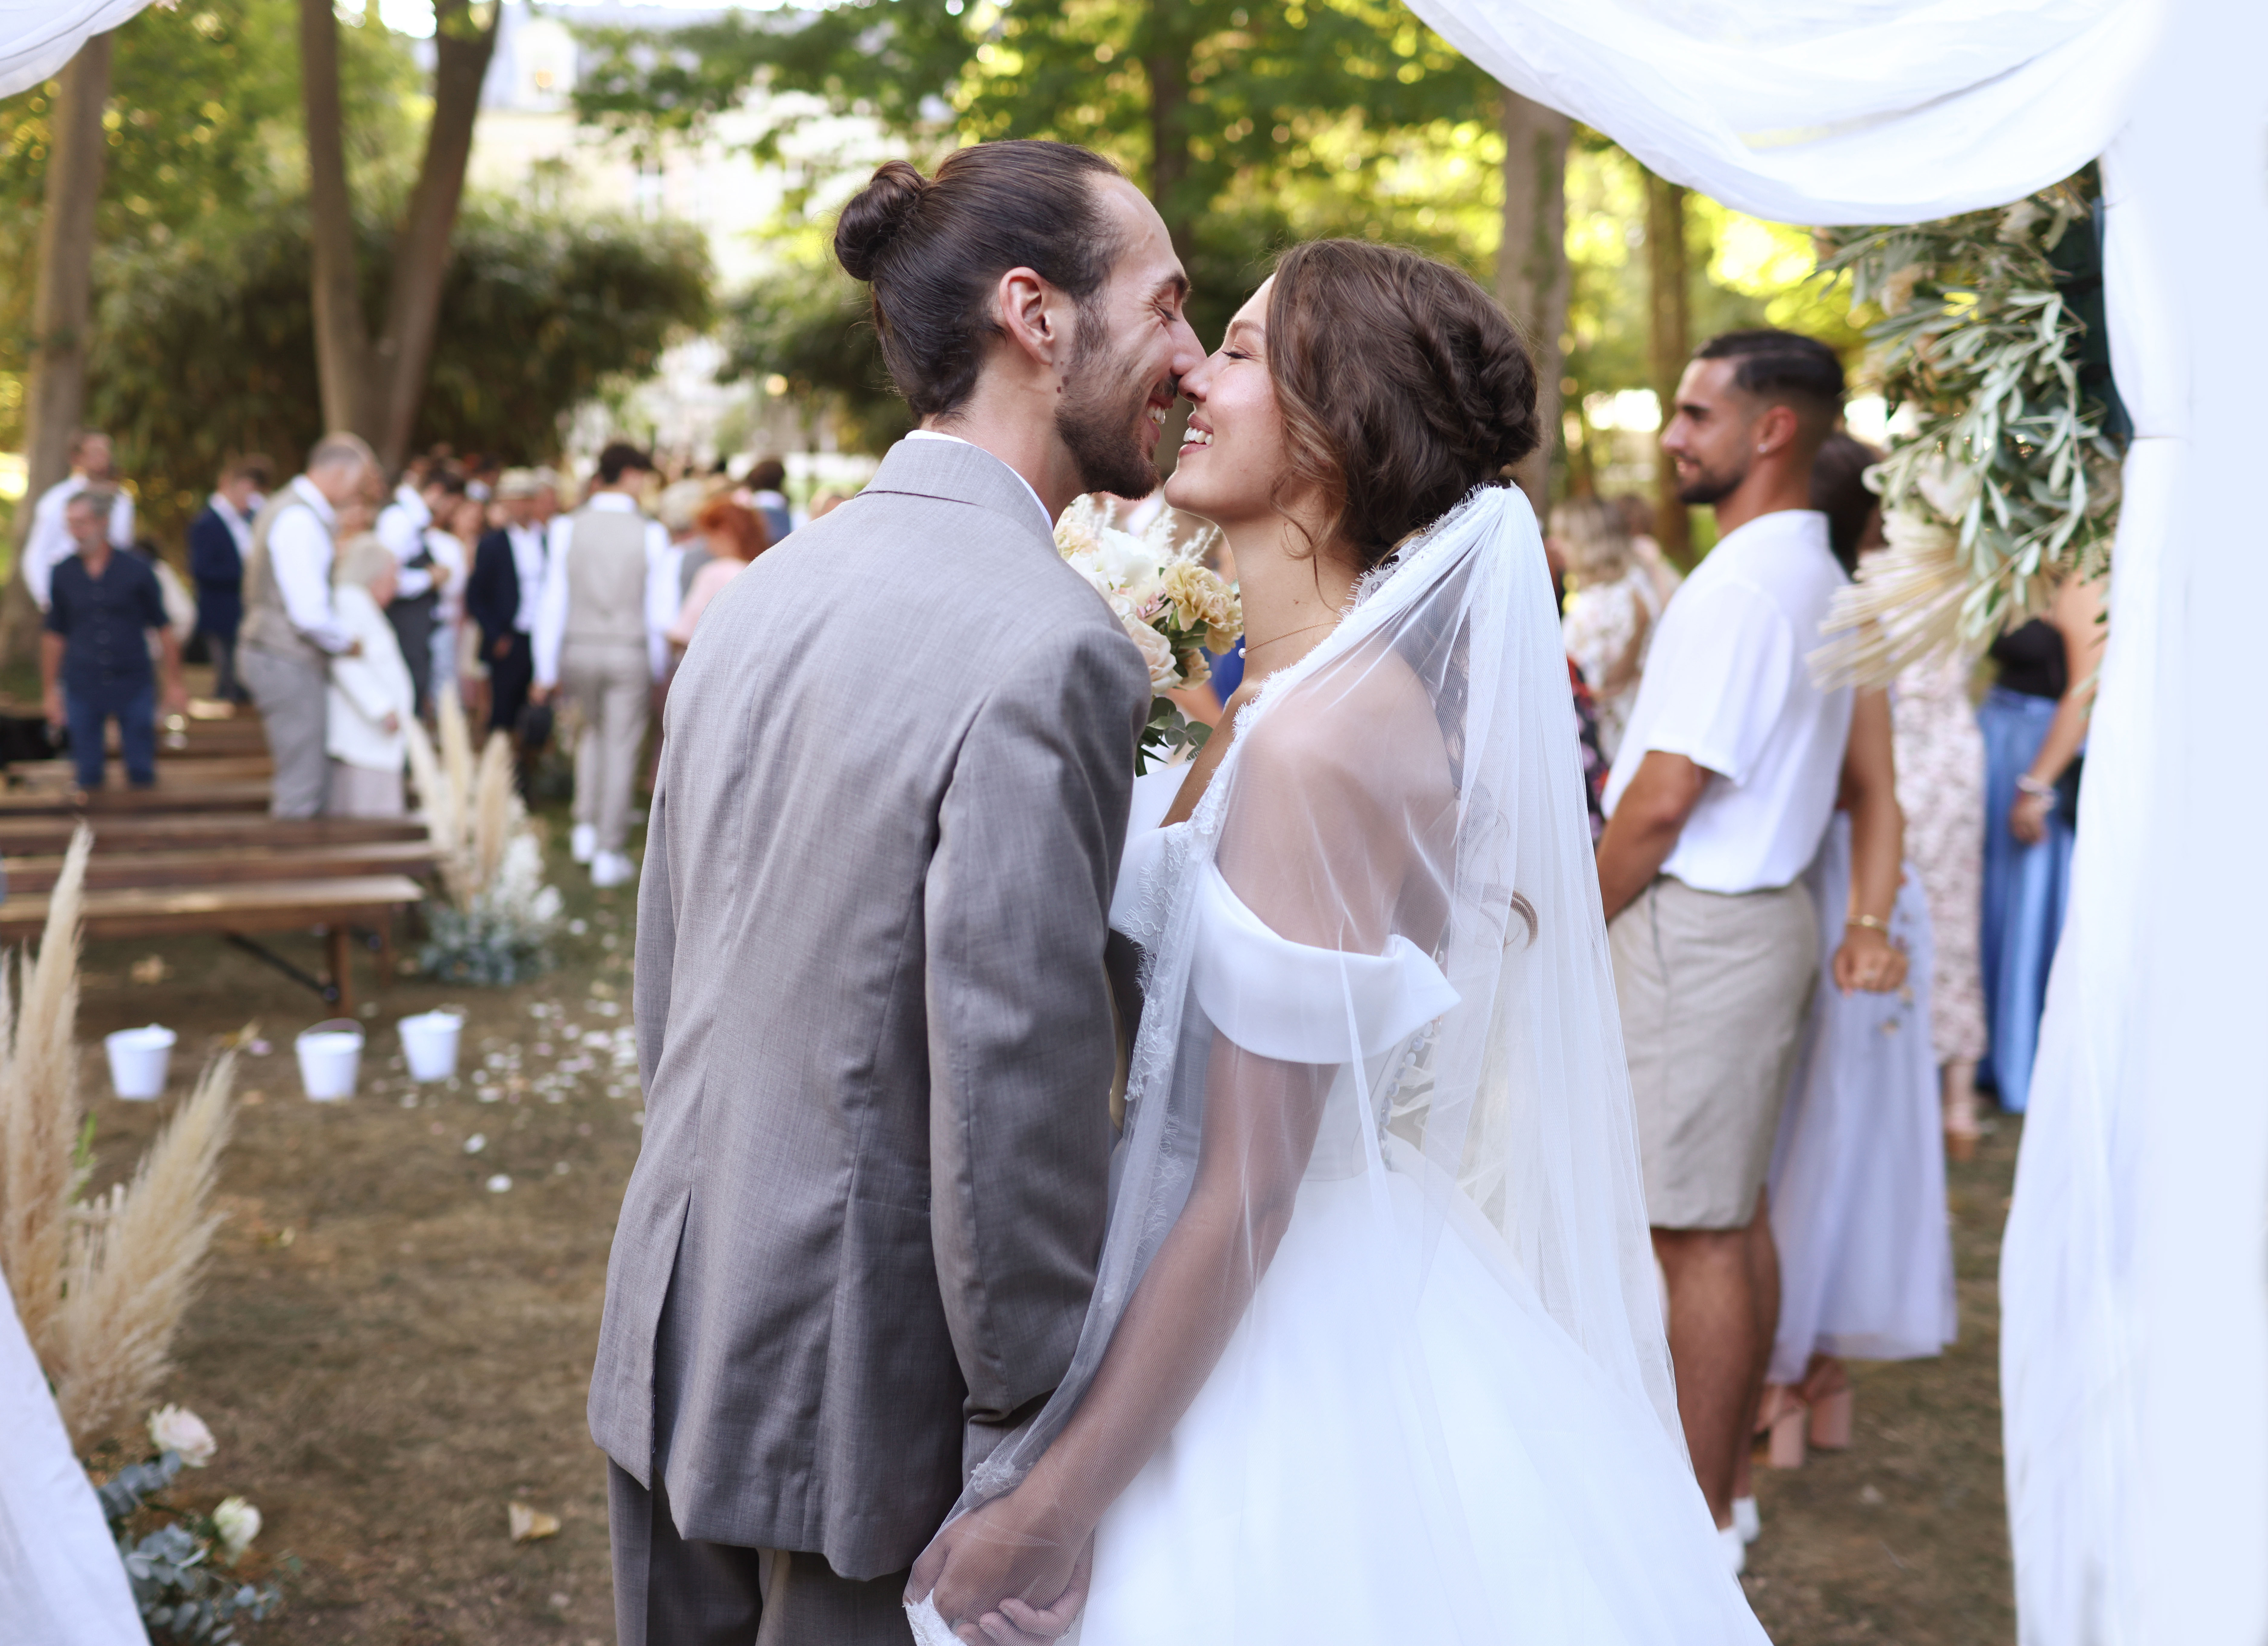 Un mariage heureux | Source : Getty Images